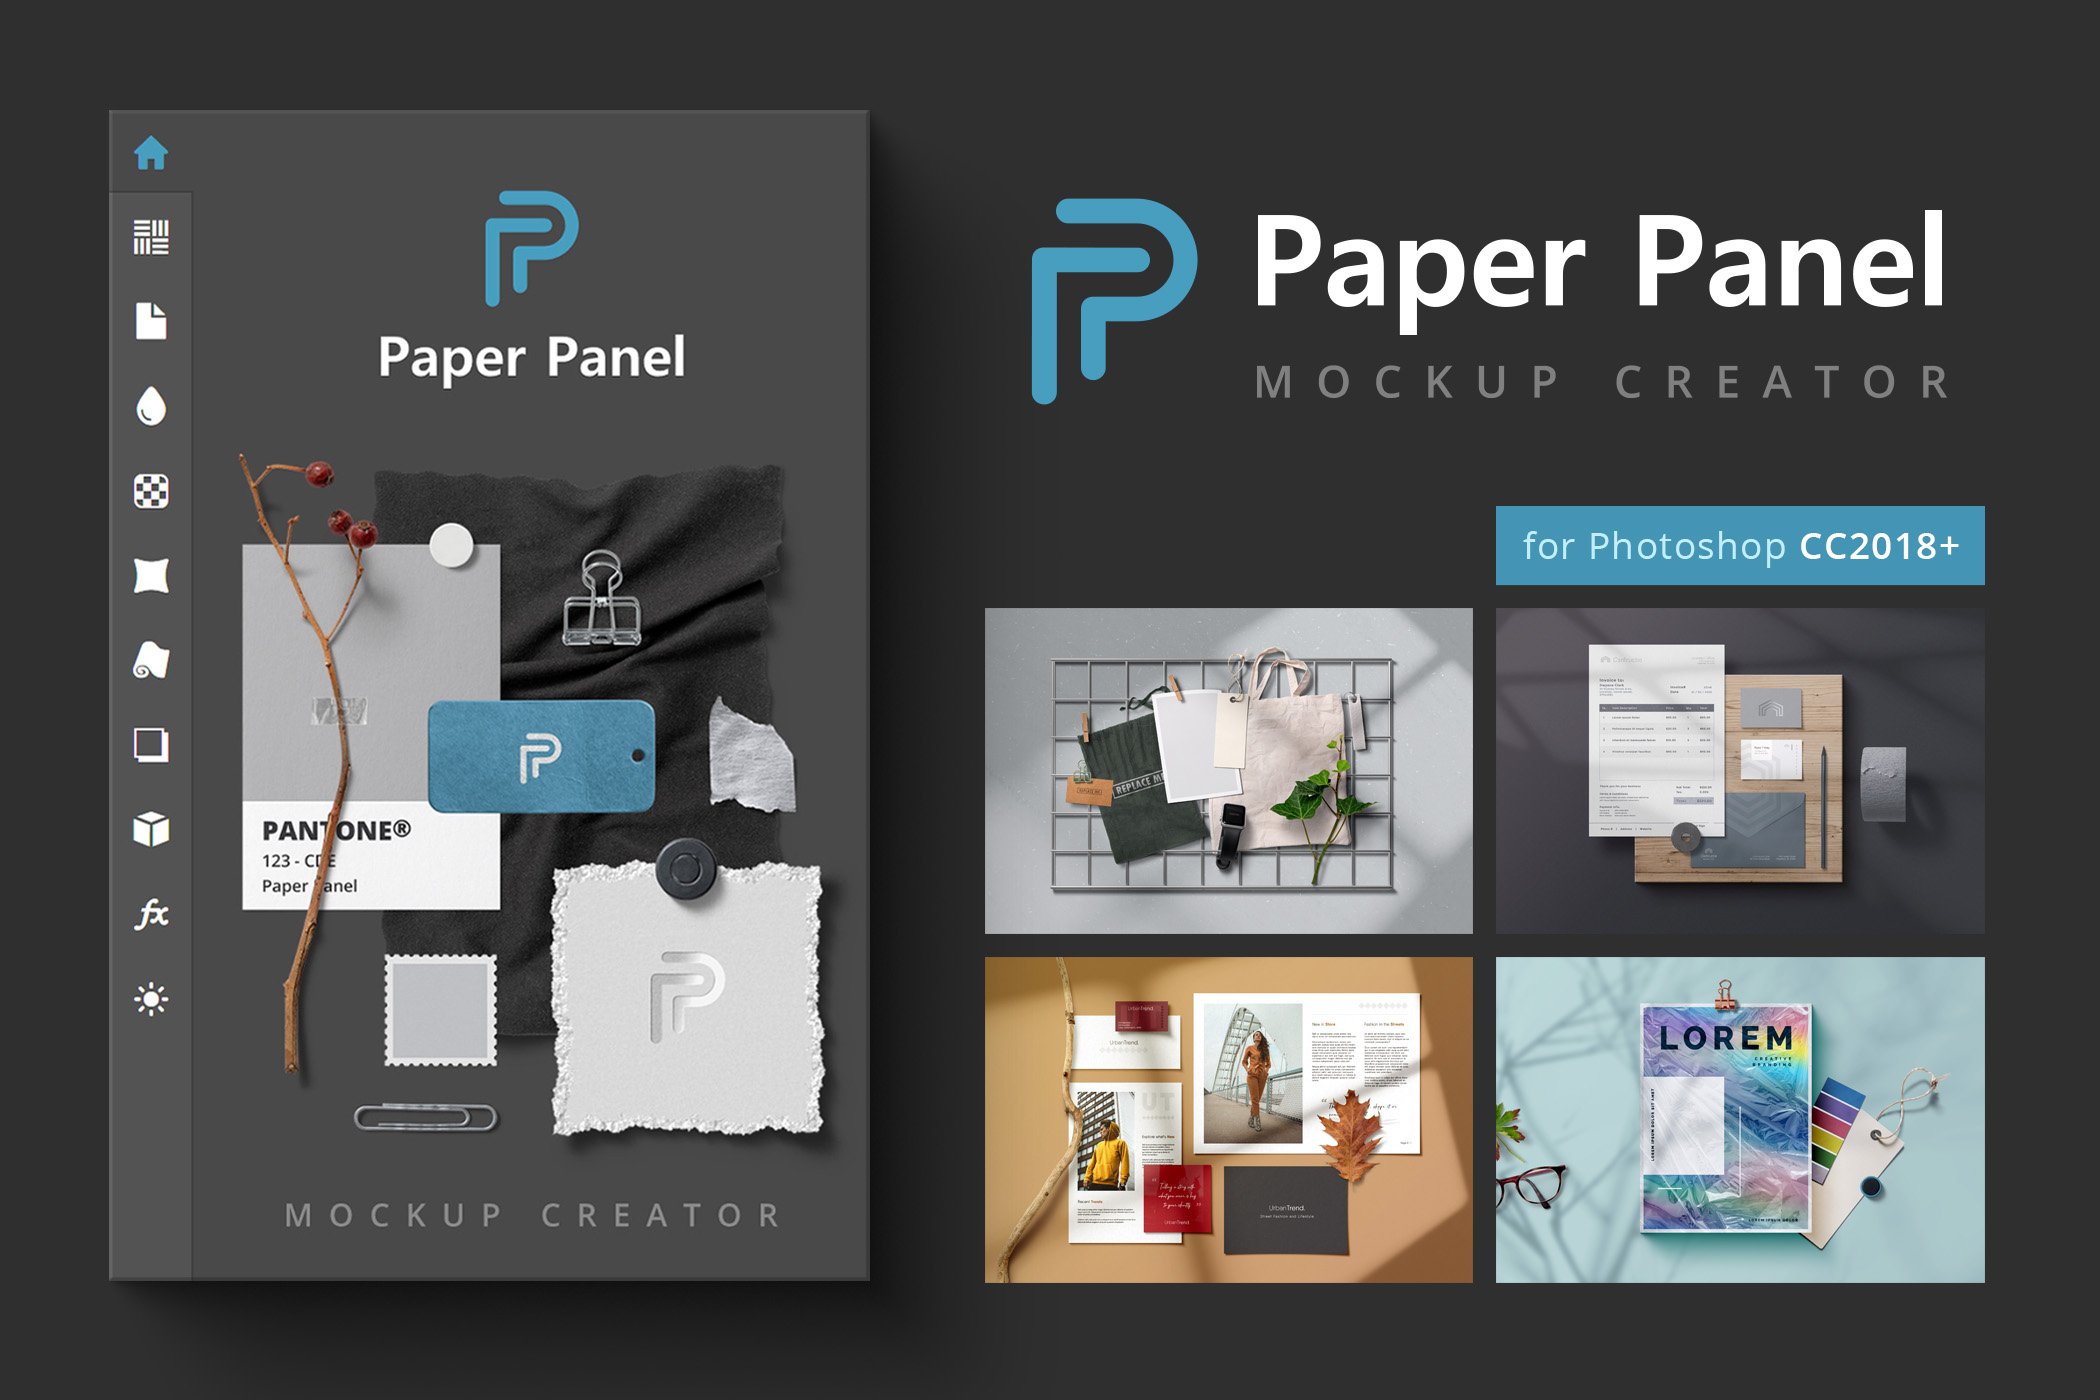 Paper Panel - Mockup Creator cover image.